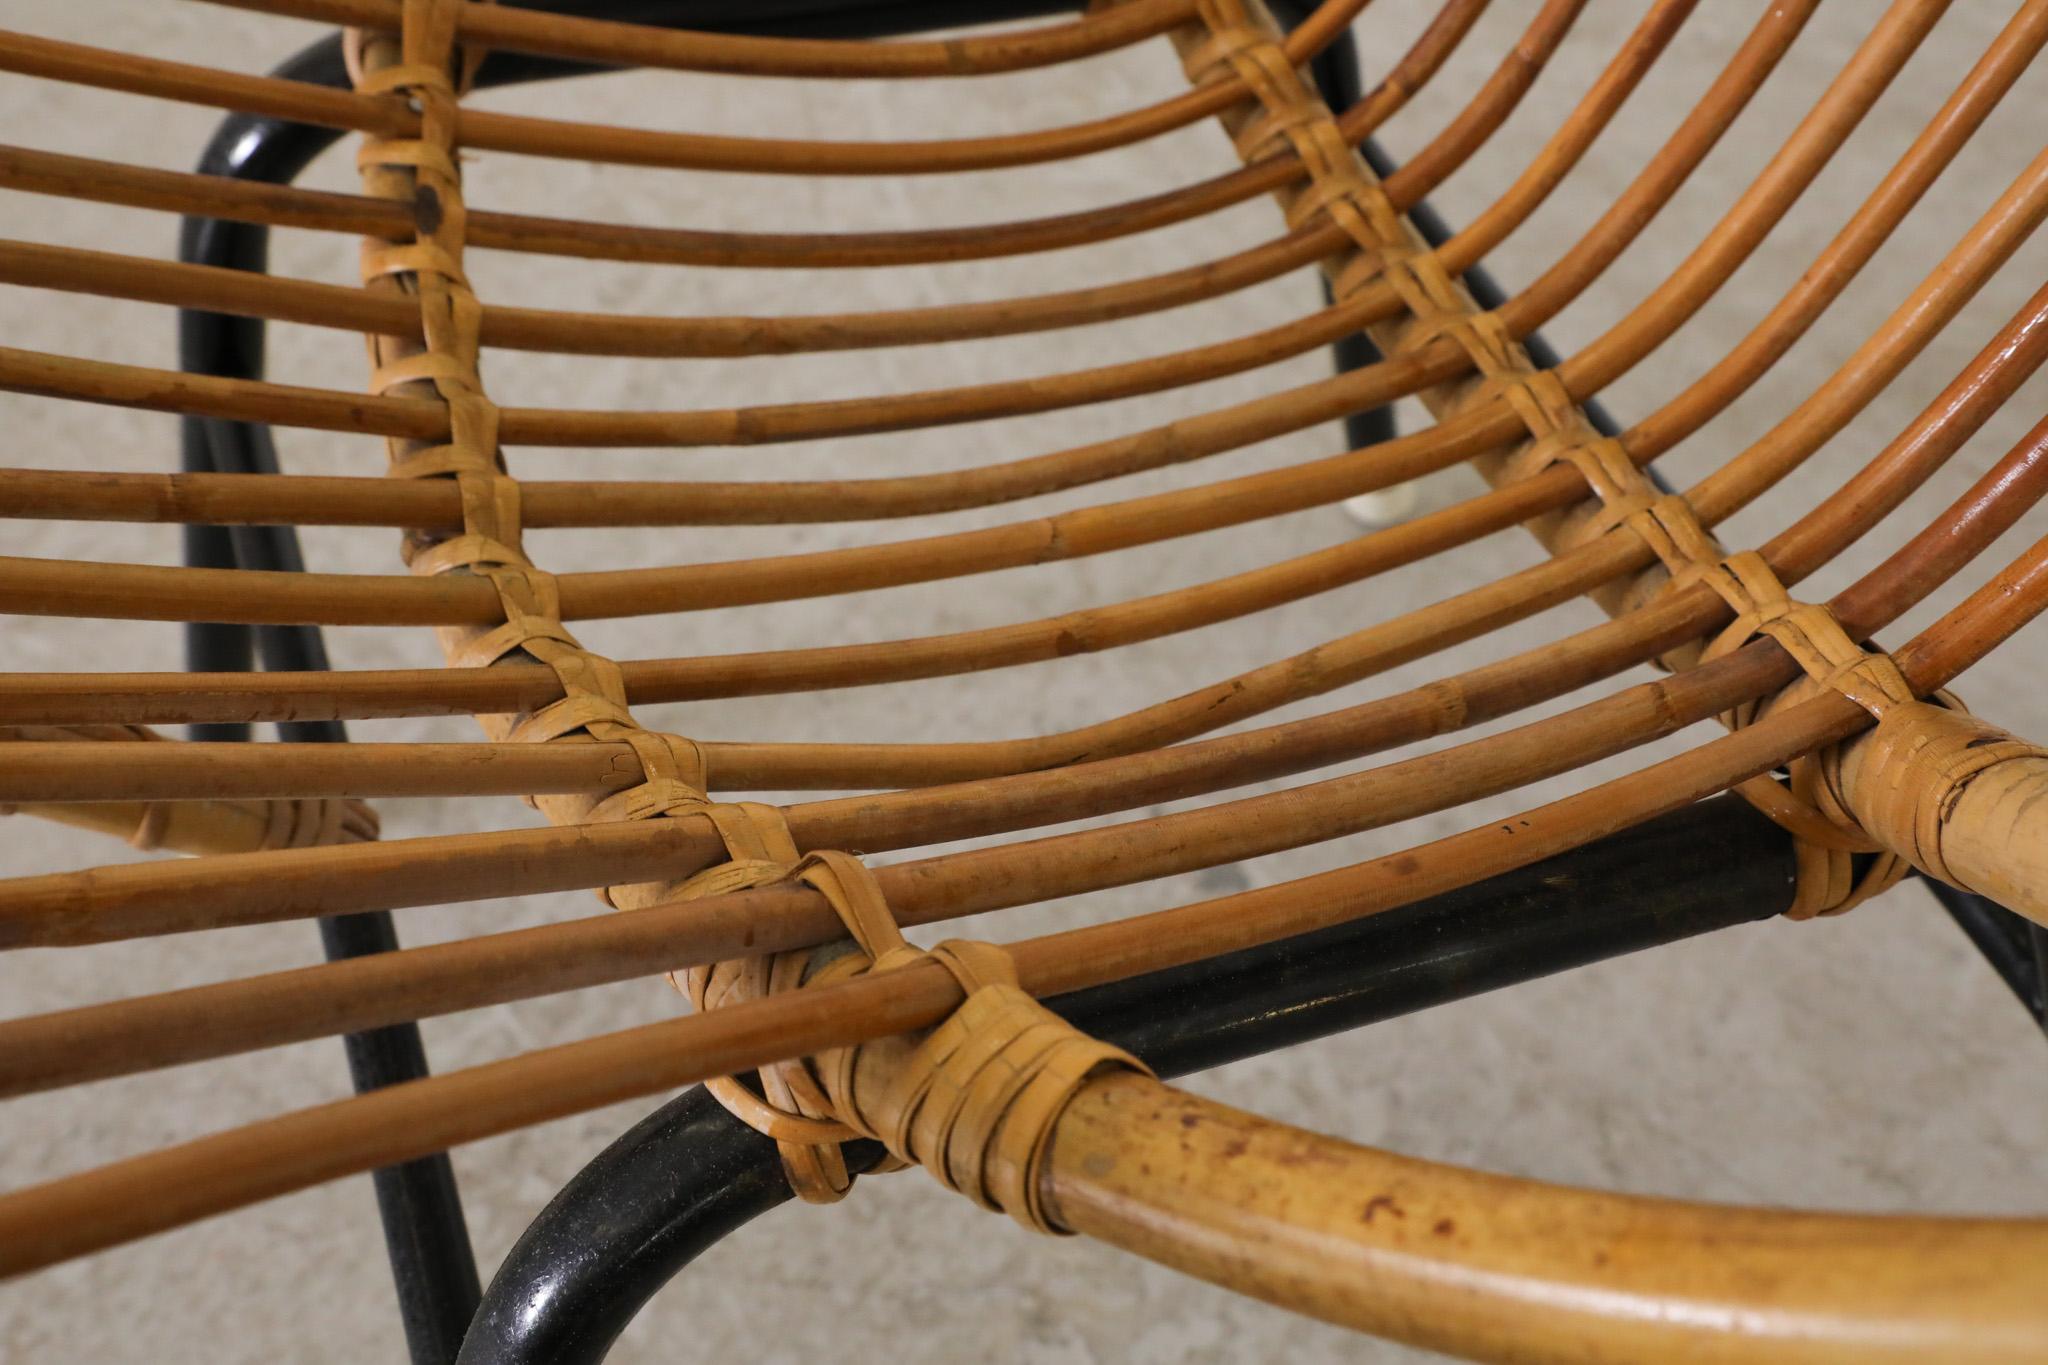 Metal Little Mid-Century Rohe Noordwolde Bamboo Hoop Chair For Sale